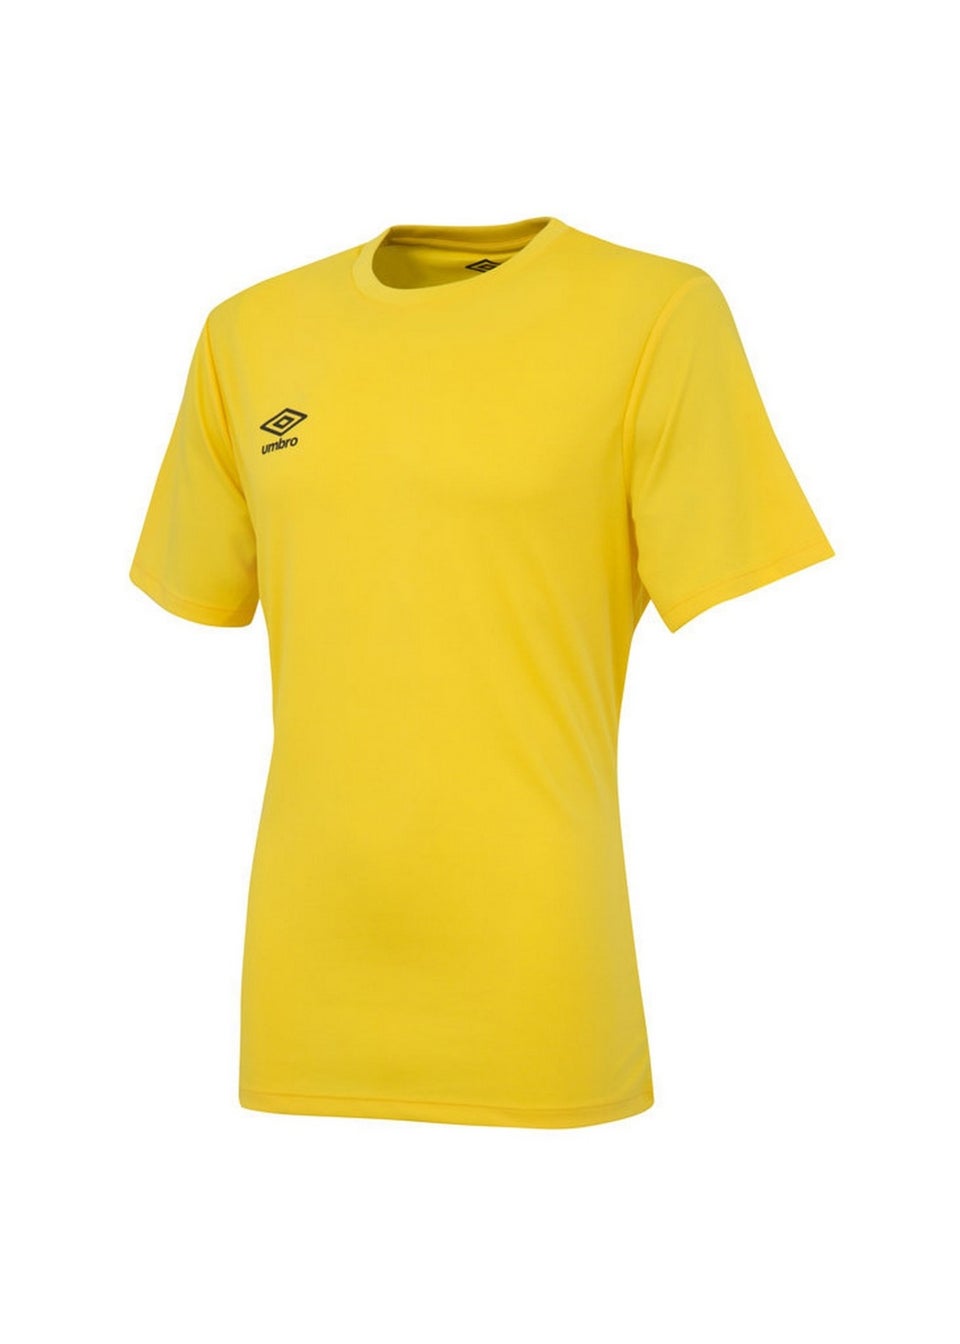 Umbro Yellow Club Short-Sleeved Jersey